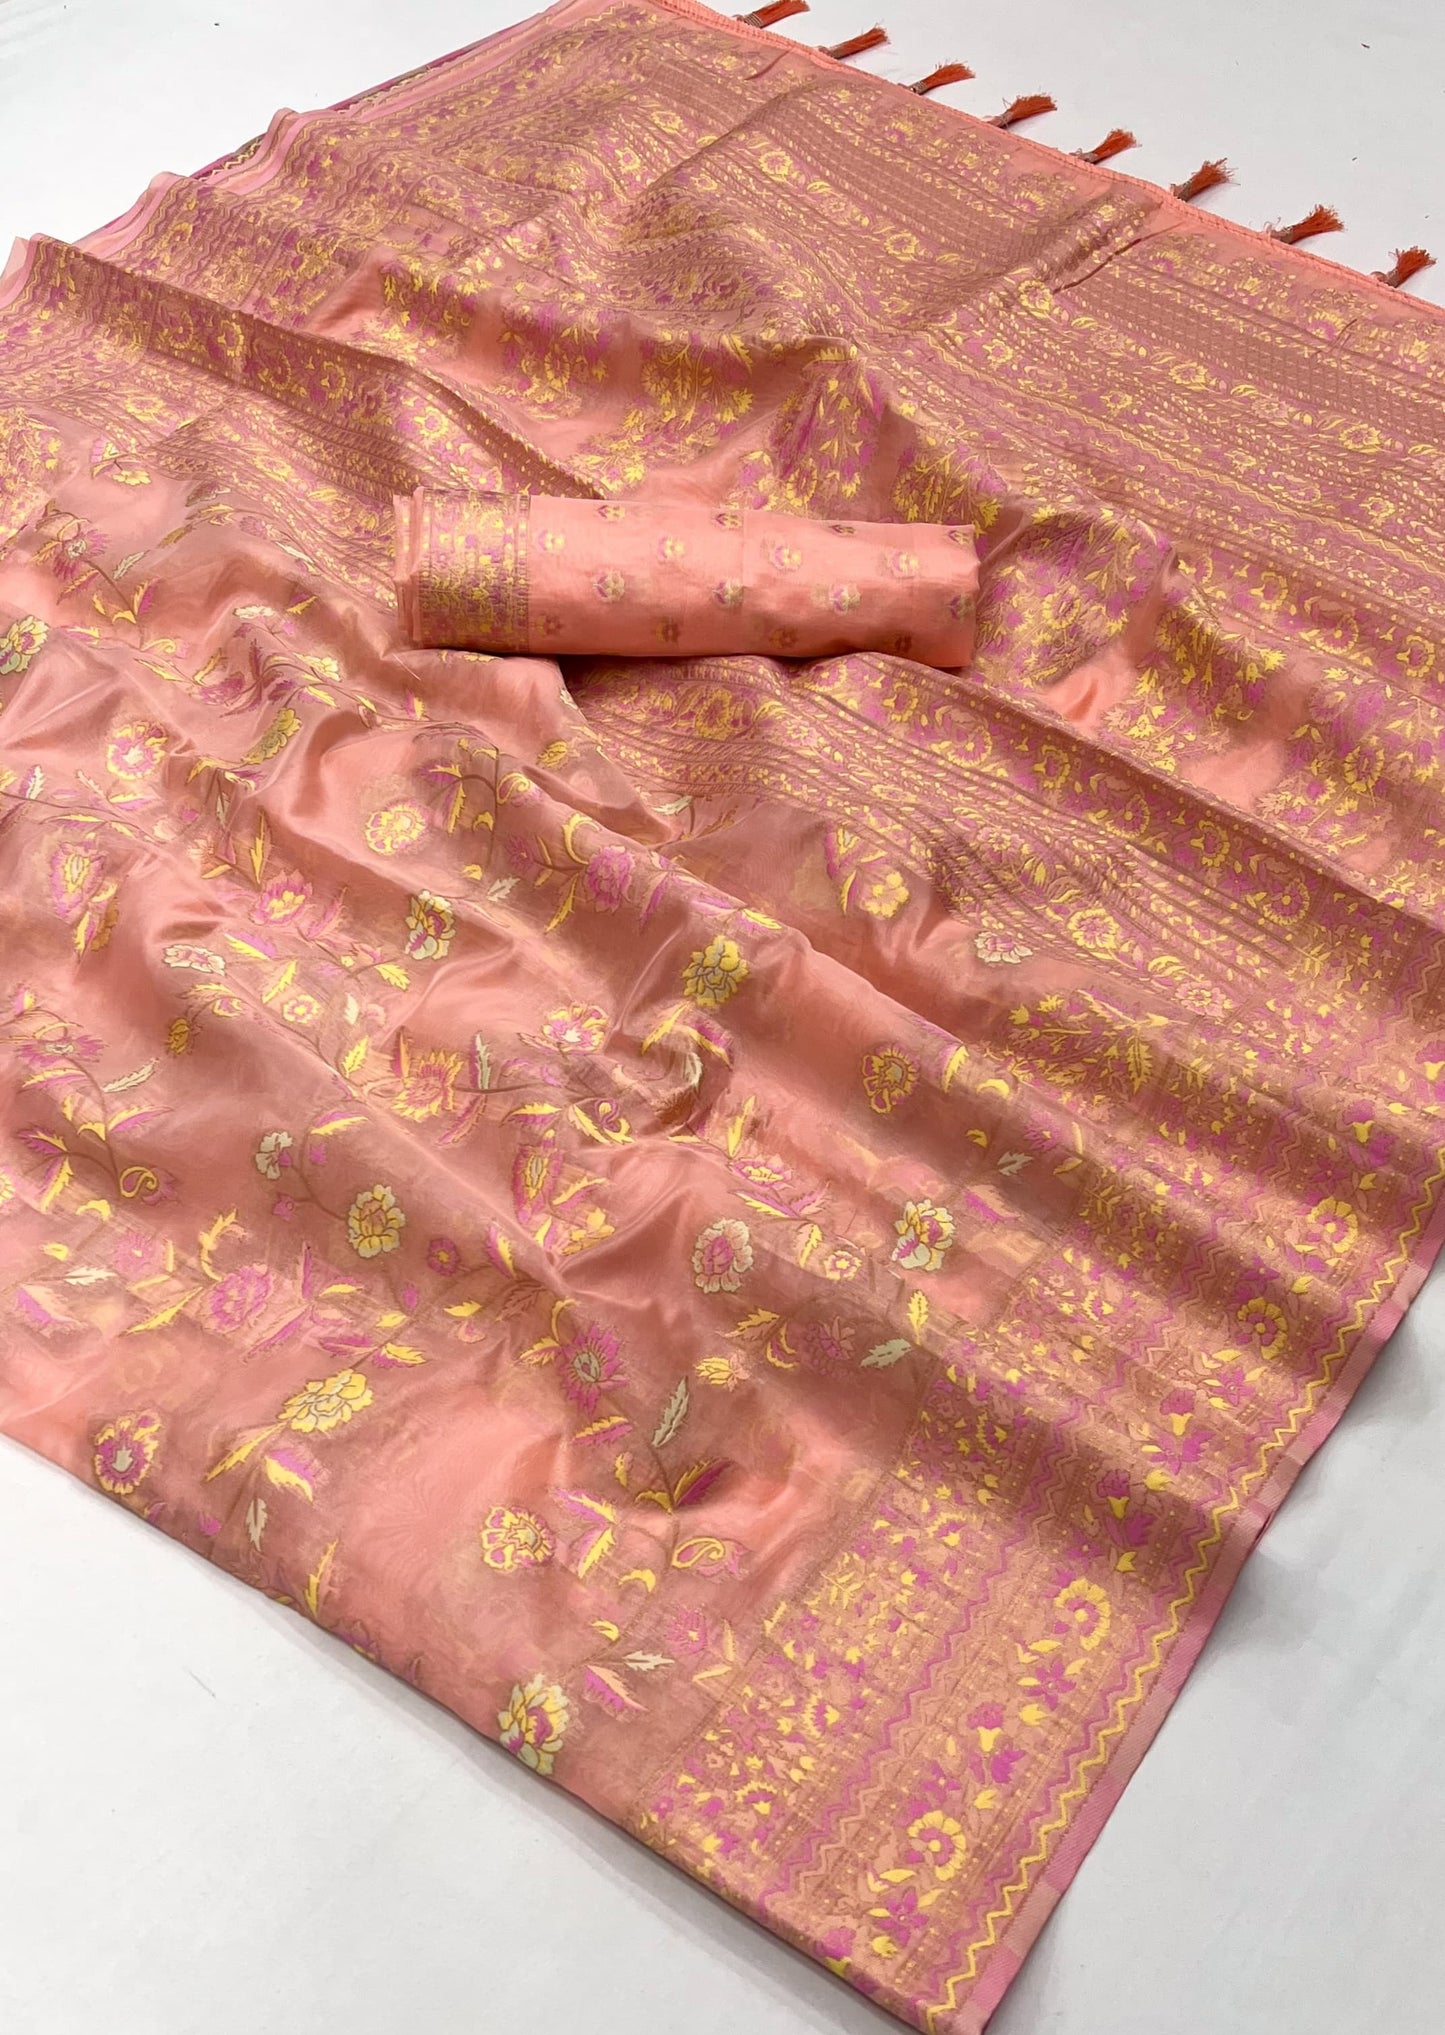 Kashmiri organza embroidered bridal peach saree online shopping for wedding.